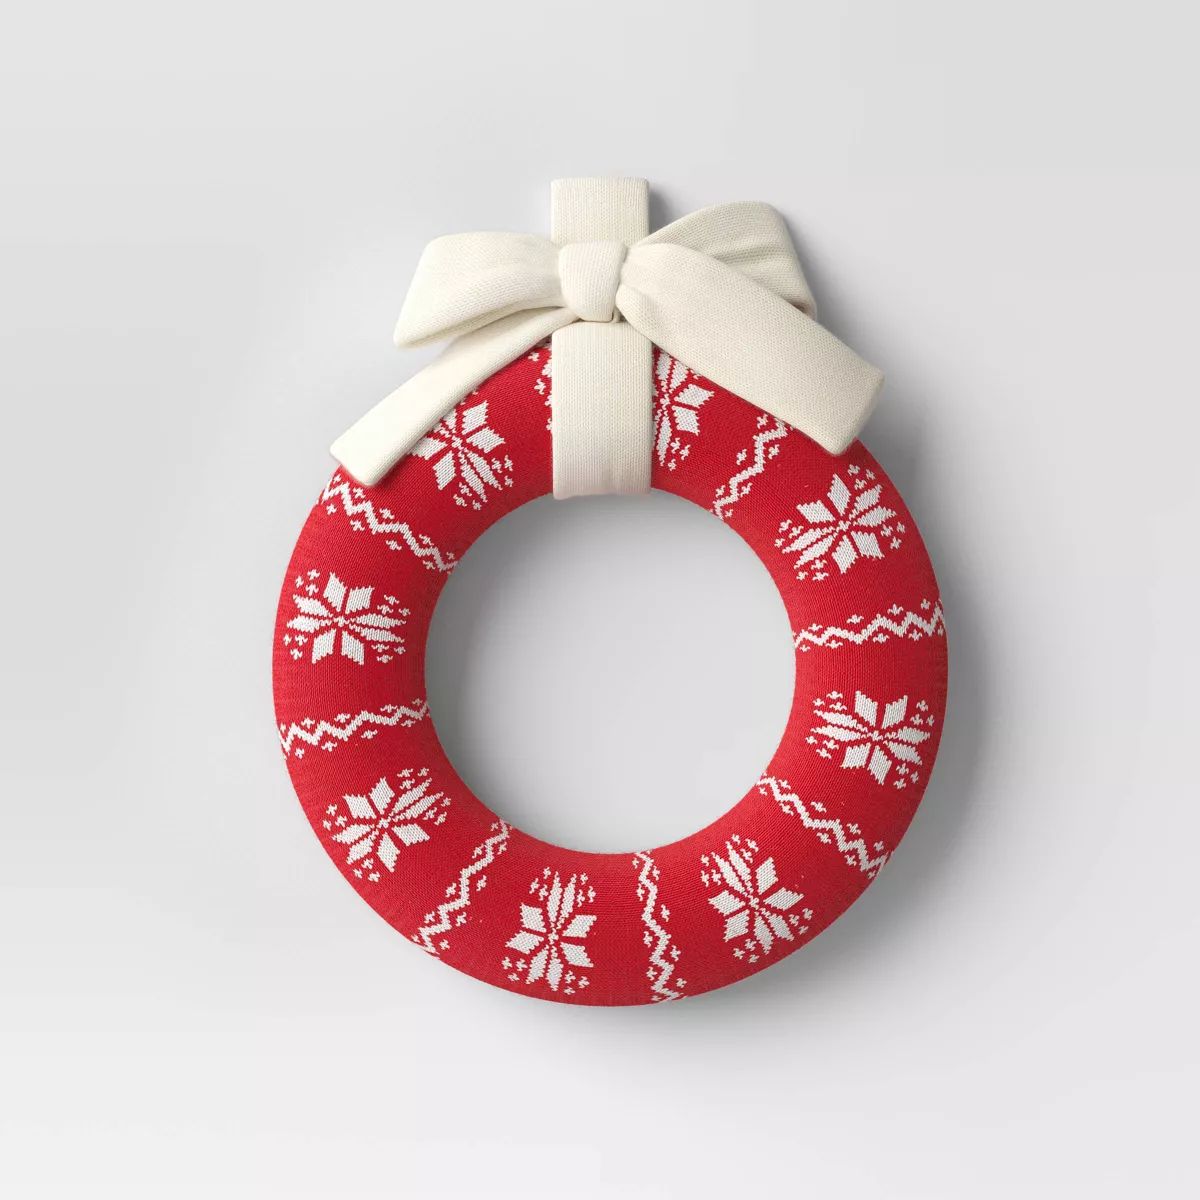 16" Knit Fair Isle Christmas Decorative Wreath Red/White - Wondershop™ | Target